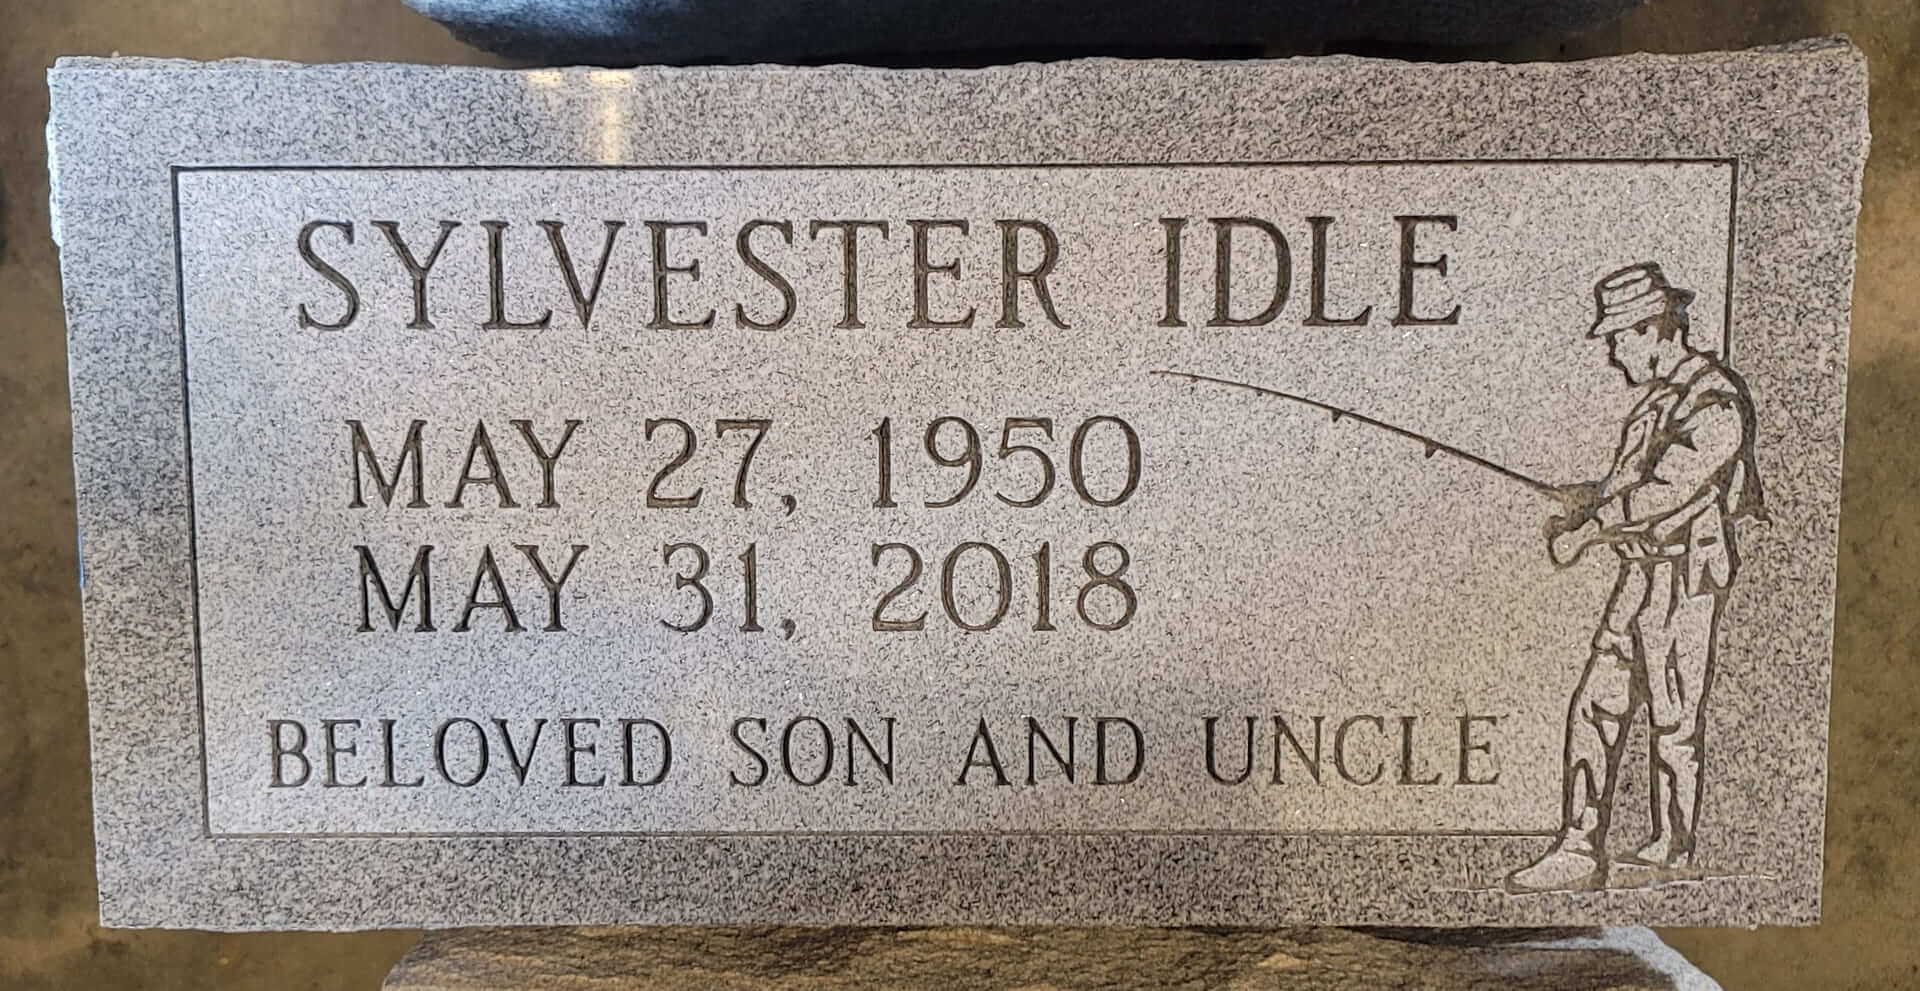 Sylvester Idle Memorial Slab Image